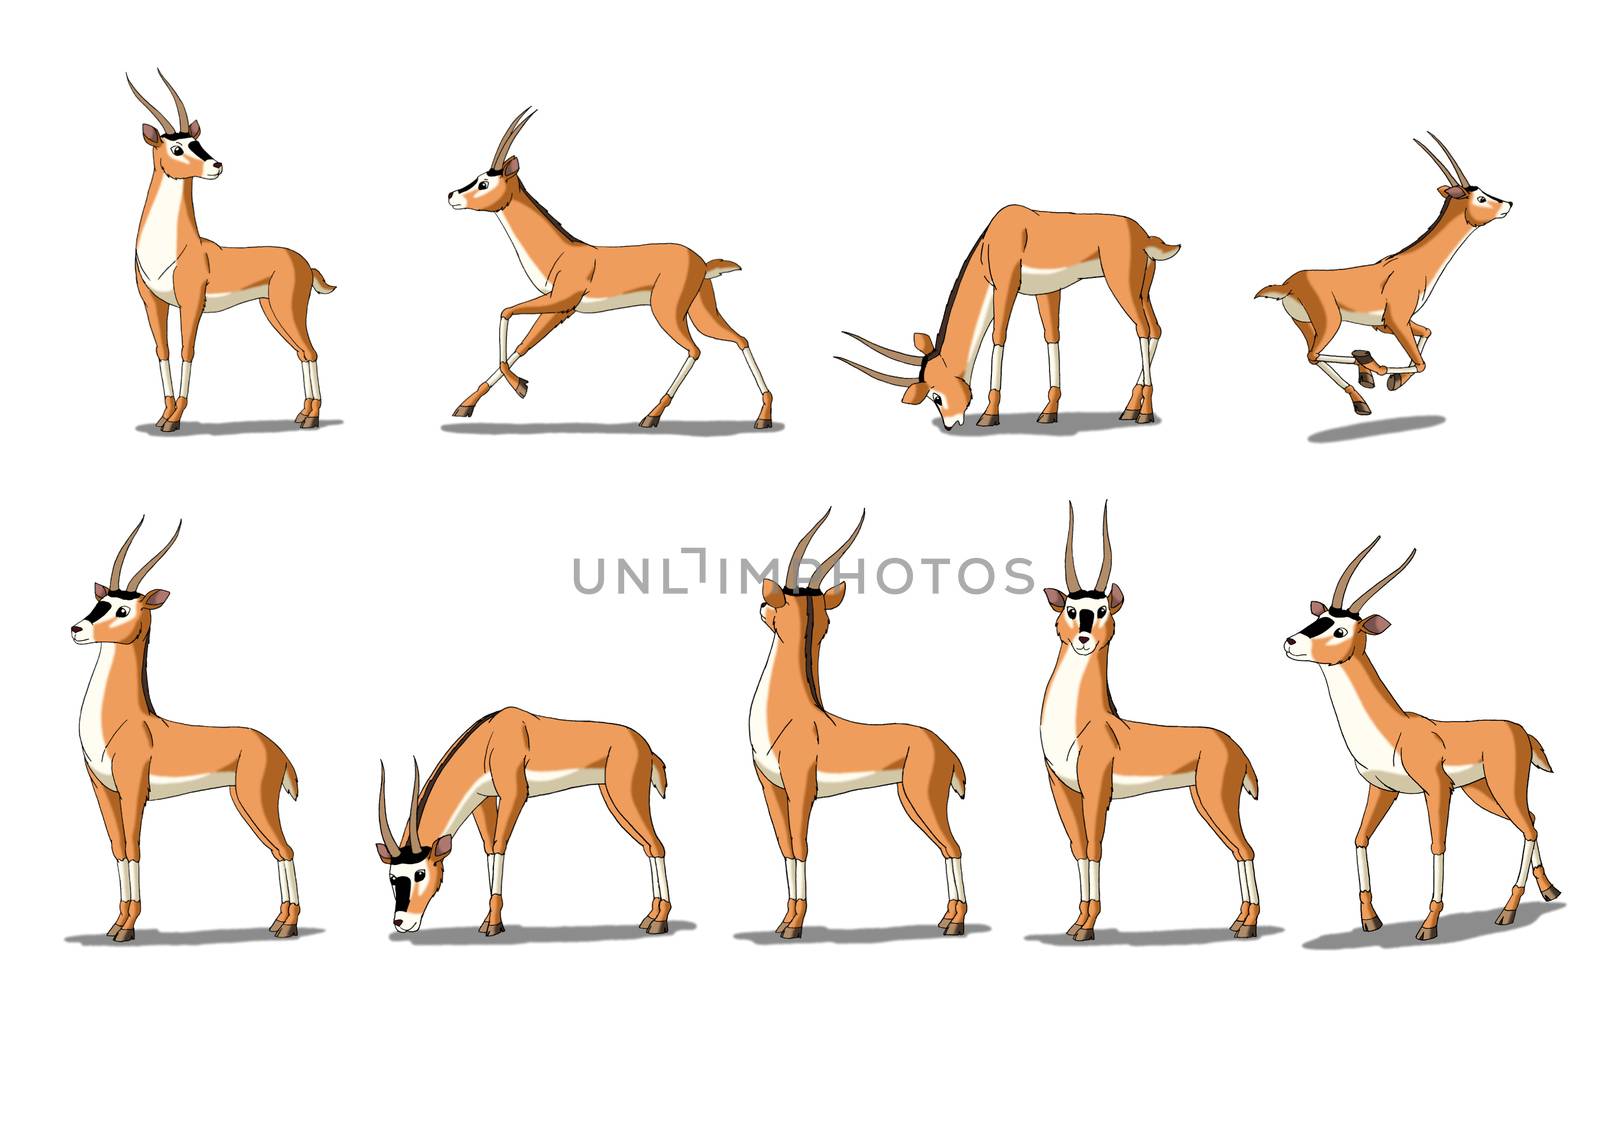 Set of Antelope images. Digital painting  full color cartoon style illustration isolated on white background.